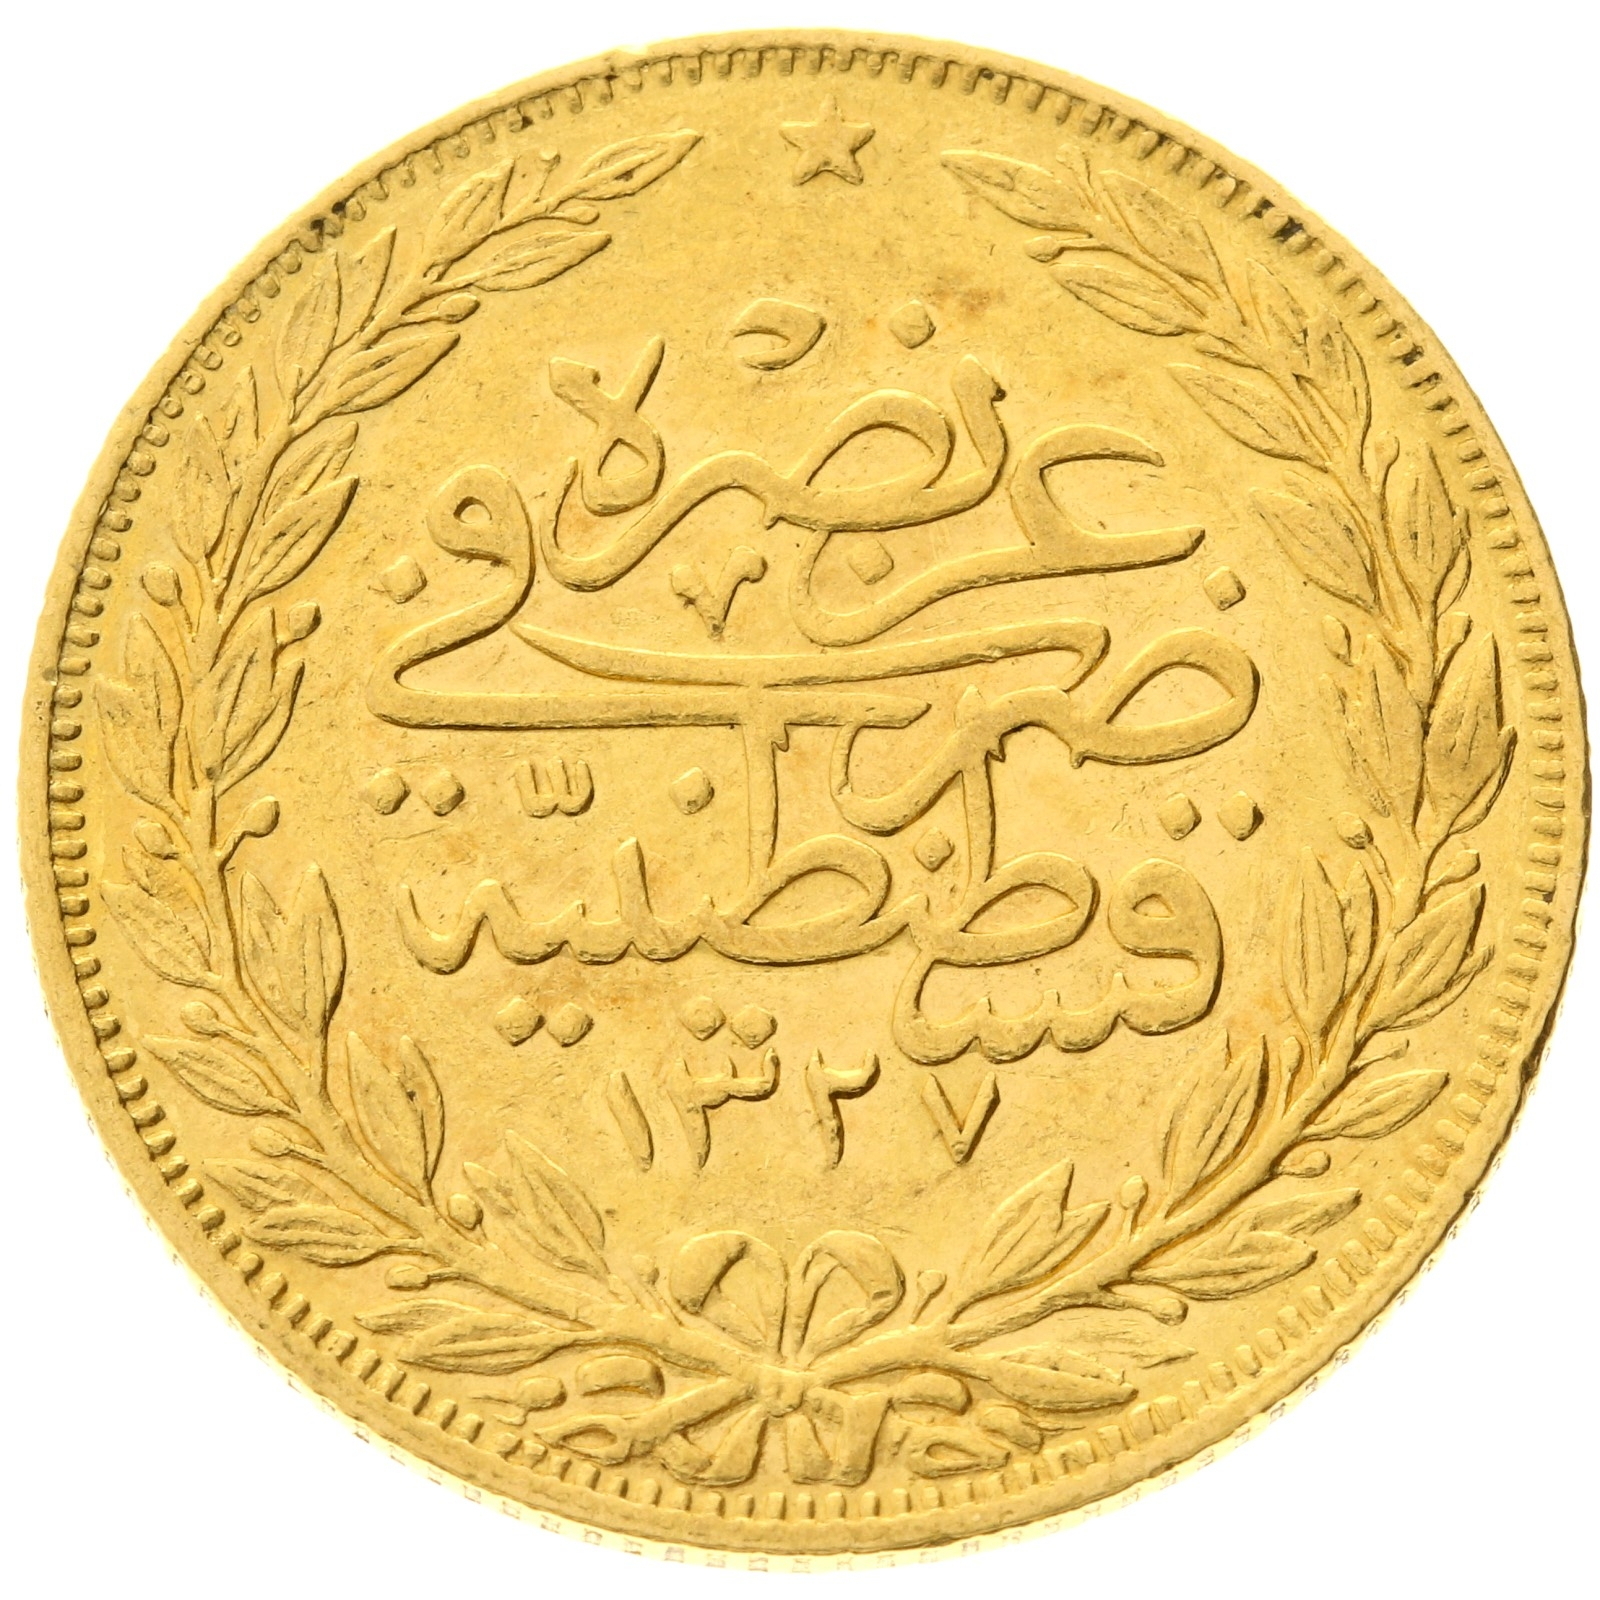 Ottoman Empire - 100 Kurush - 1327/3 - (1911) - Mehmed V 